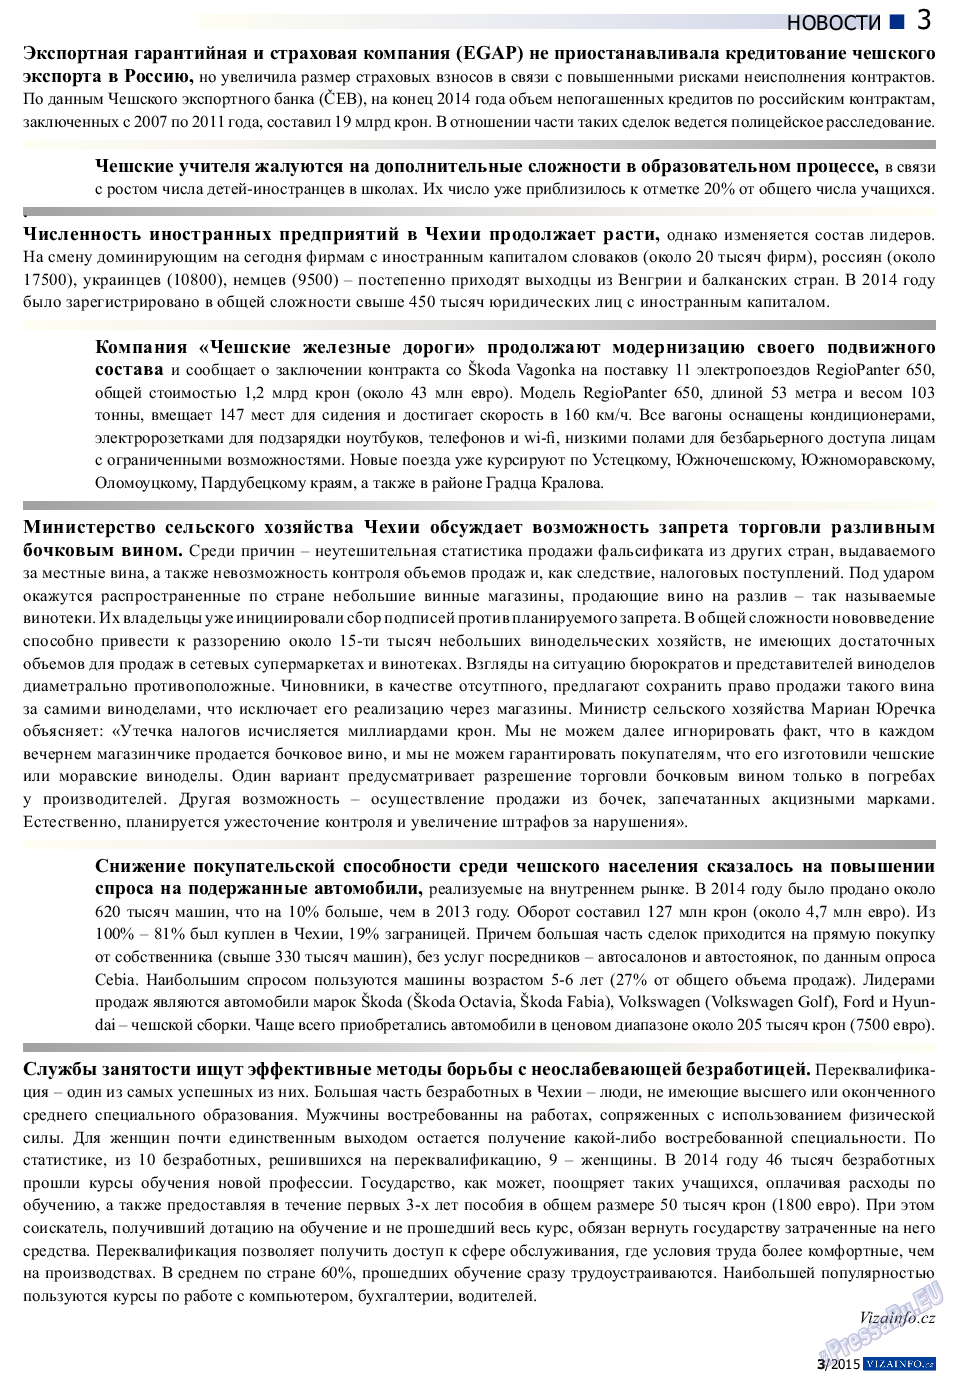 Vizainfo.cz, газета. 2015 №66 стр.3